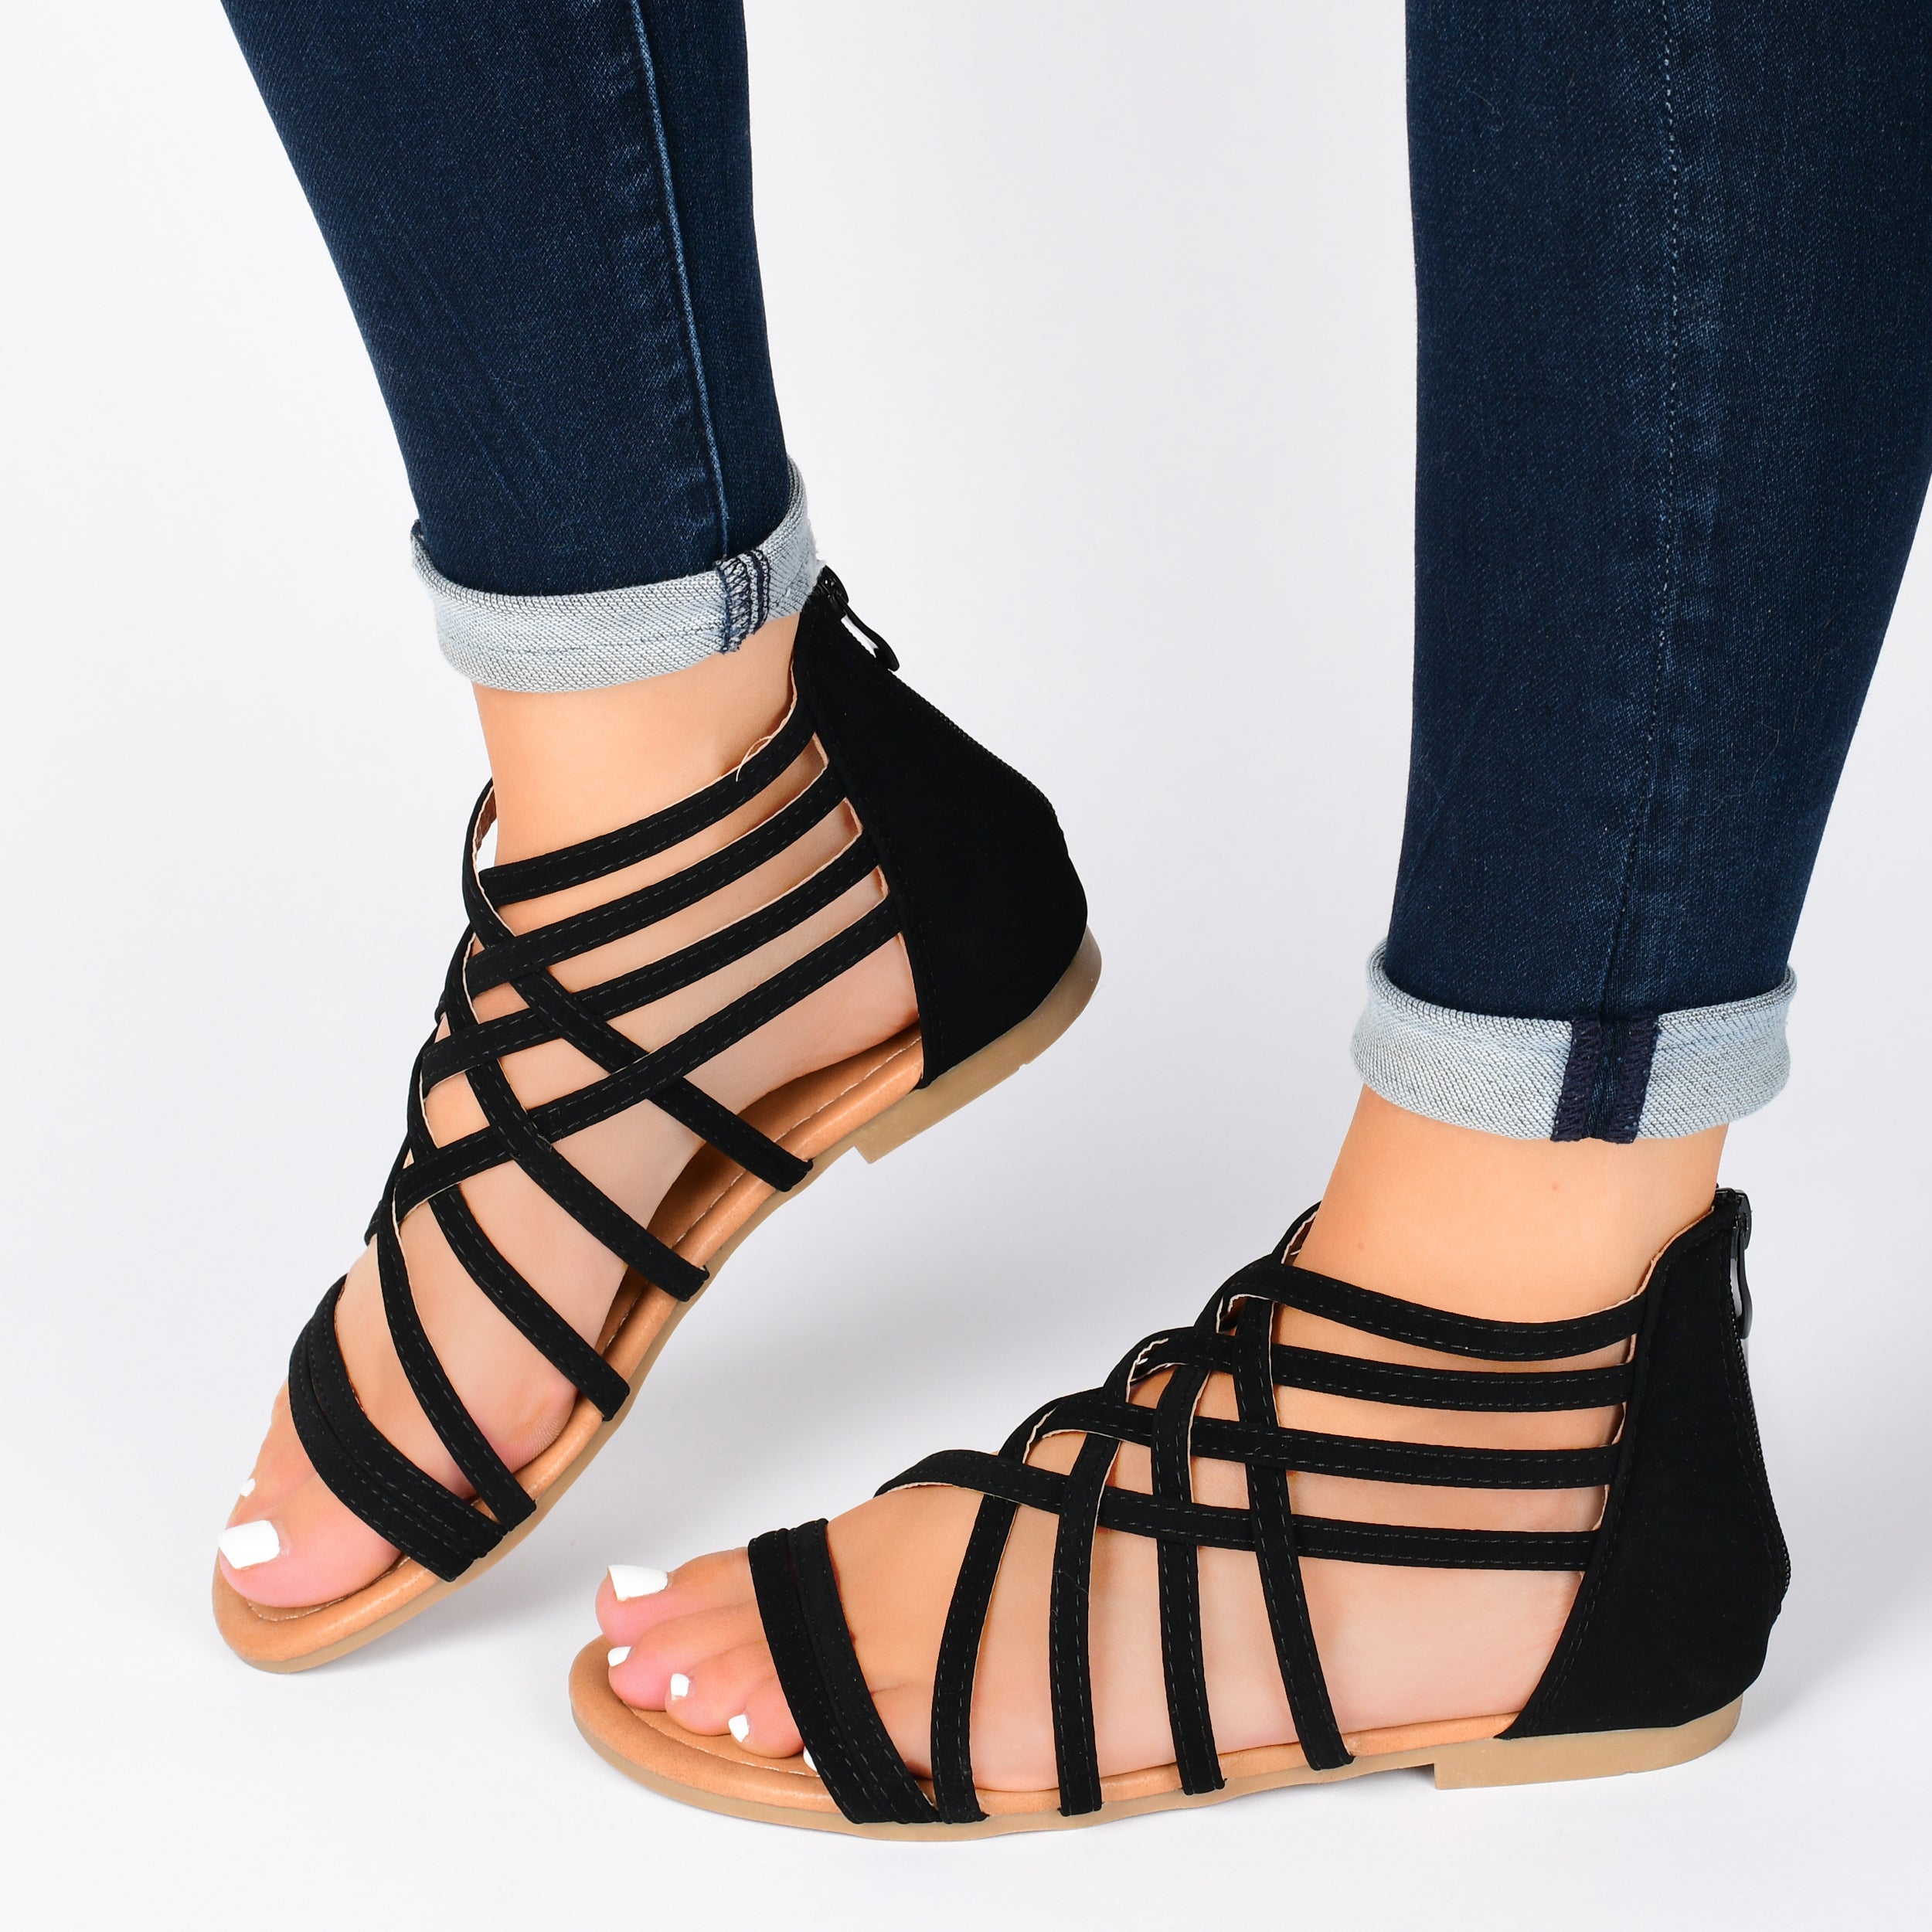 Hanni Wide Width Sandals, Women's Strappy Flats